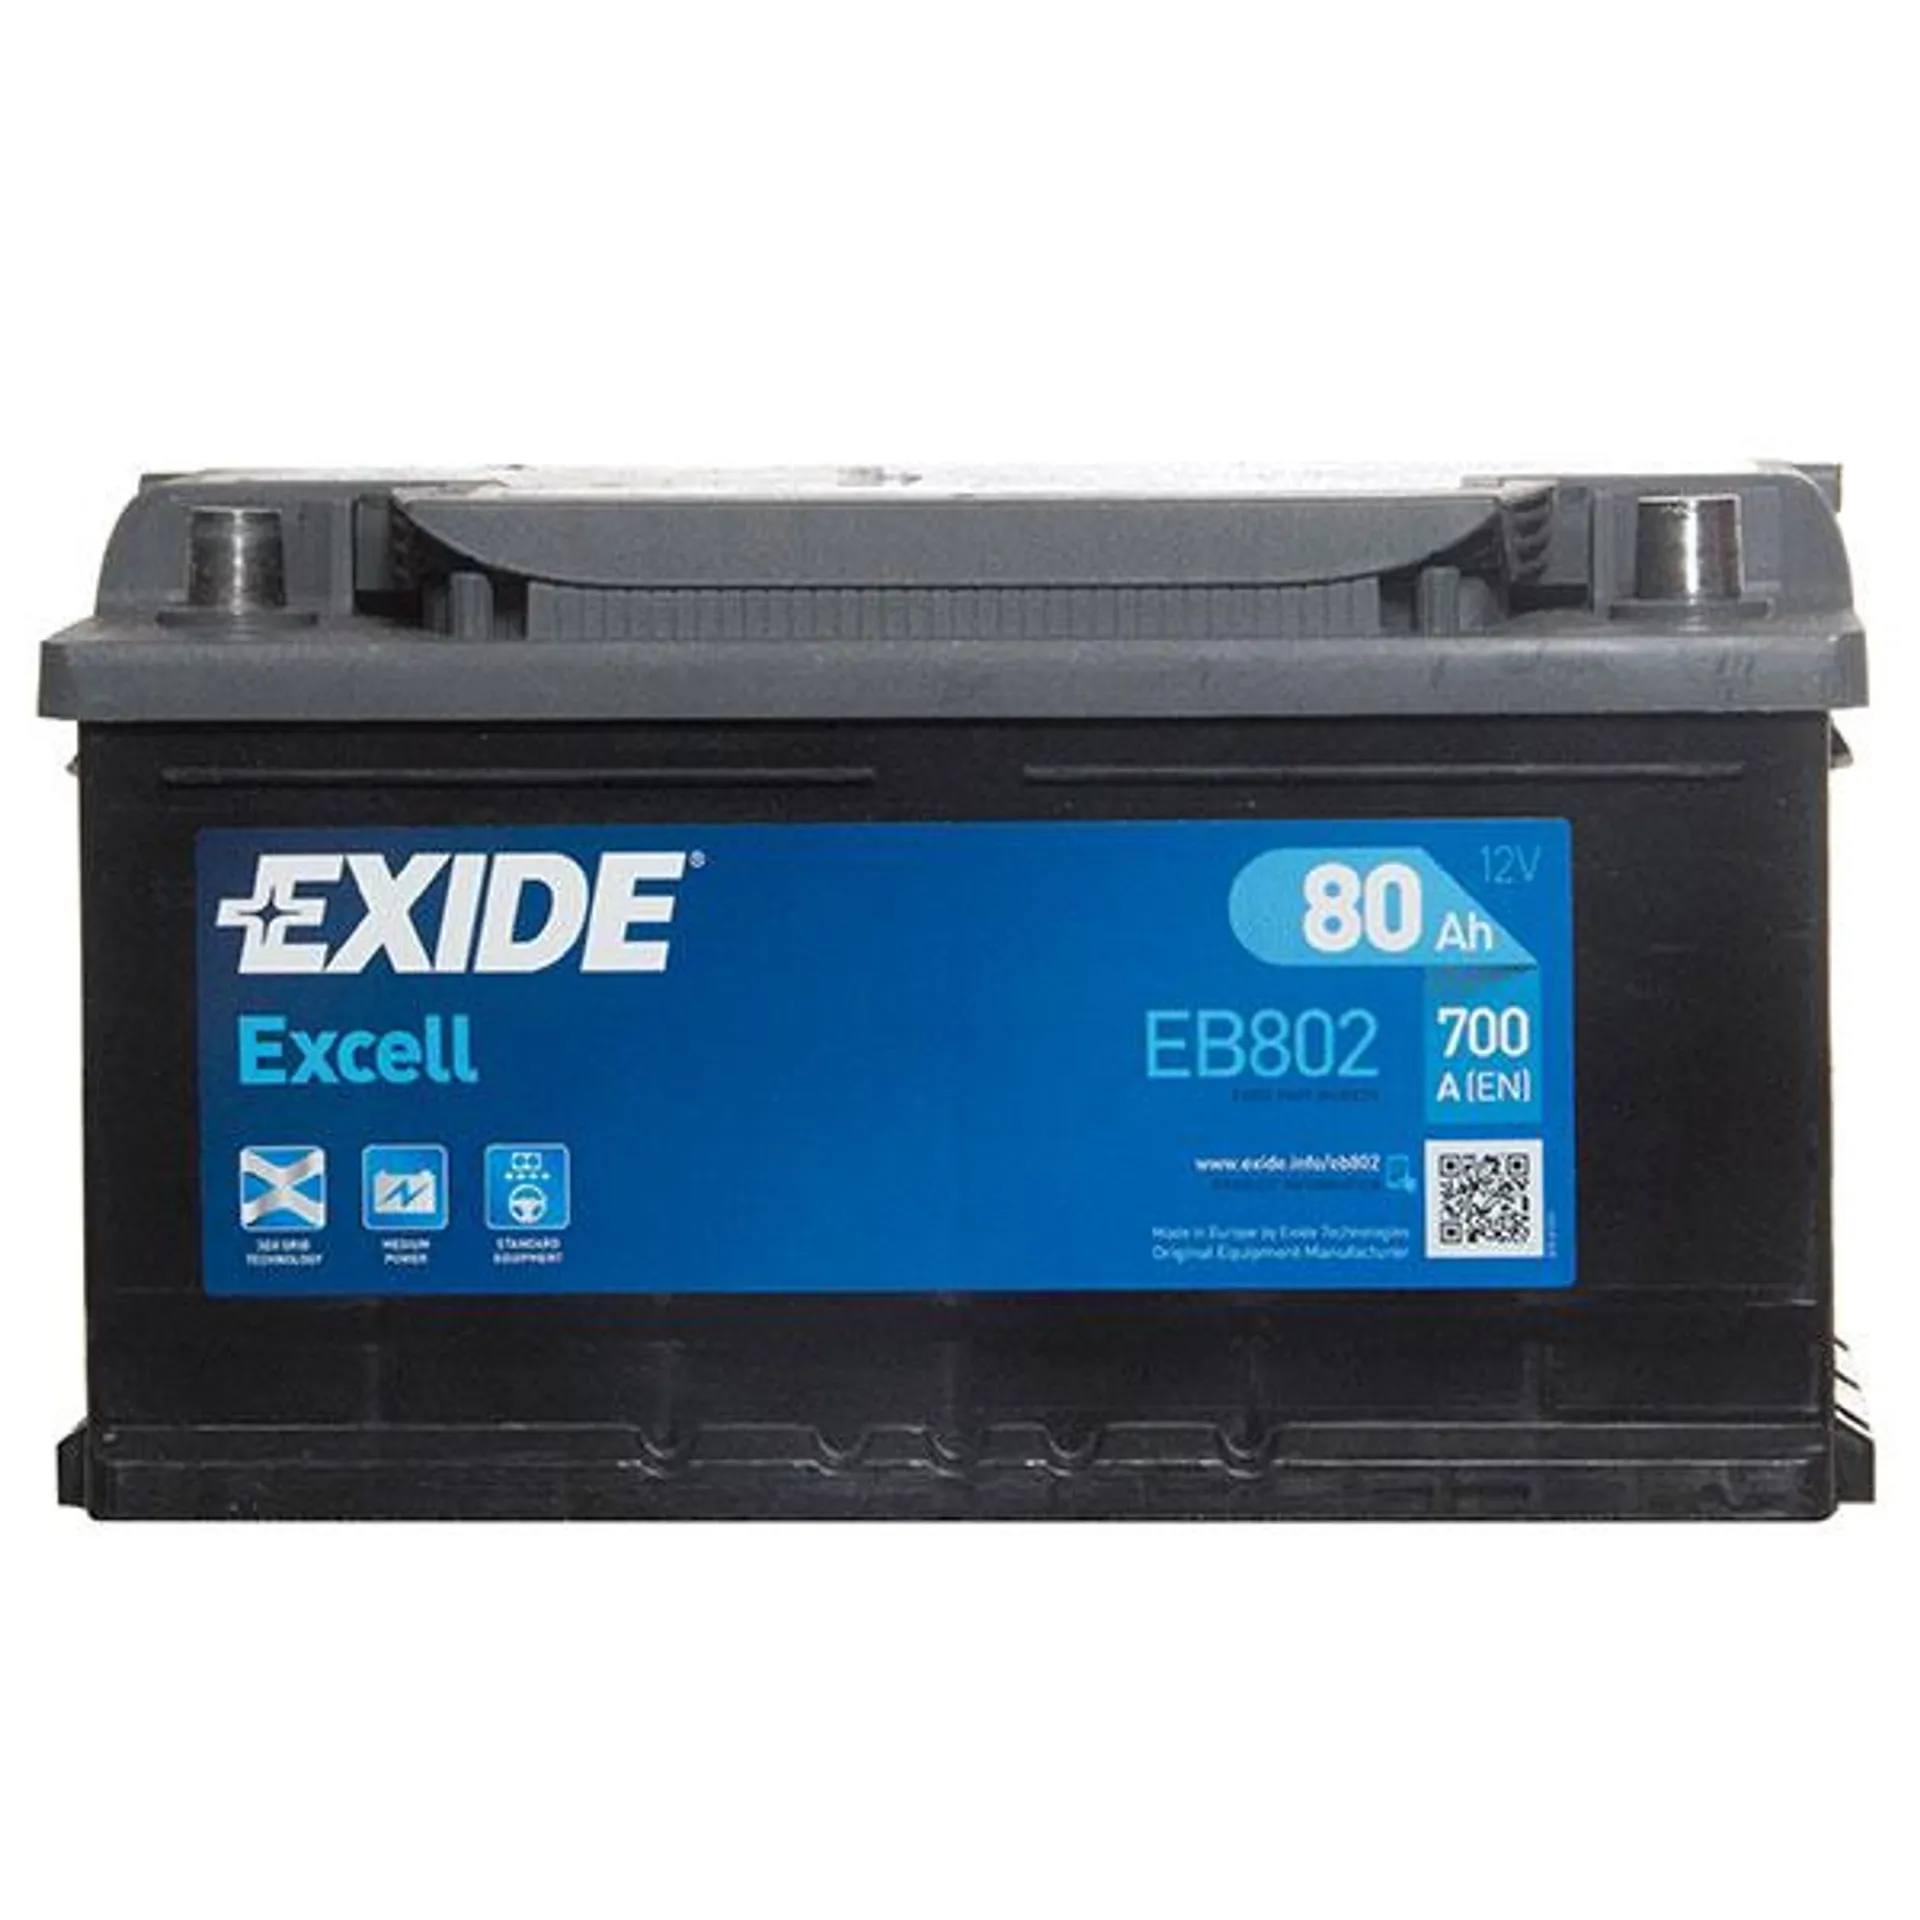 Exide Excel Car Battery 110 (80Ah) - 3 Year Guarantee